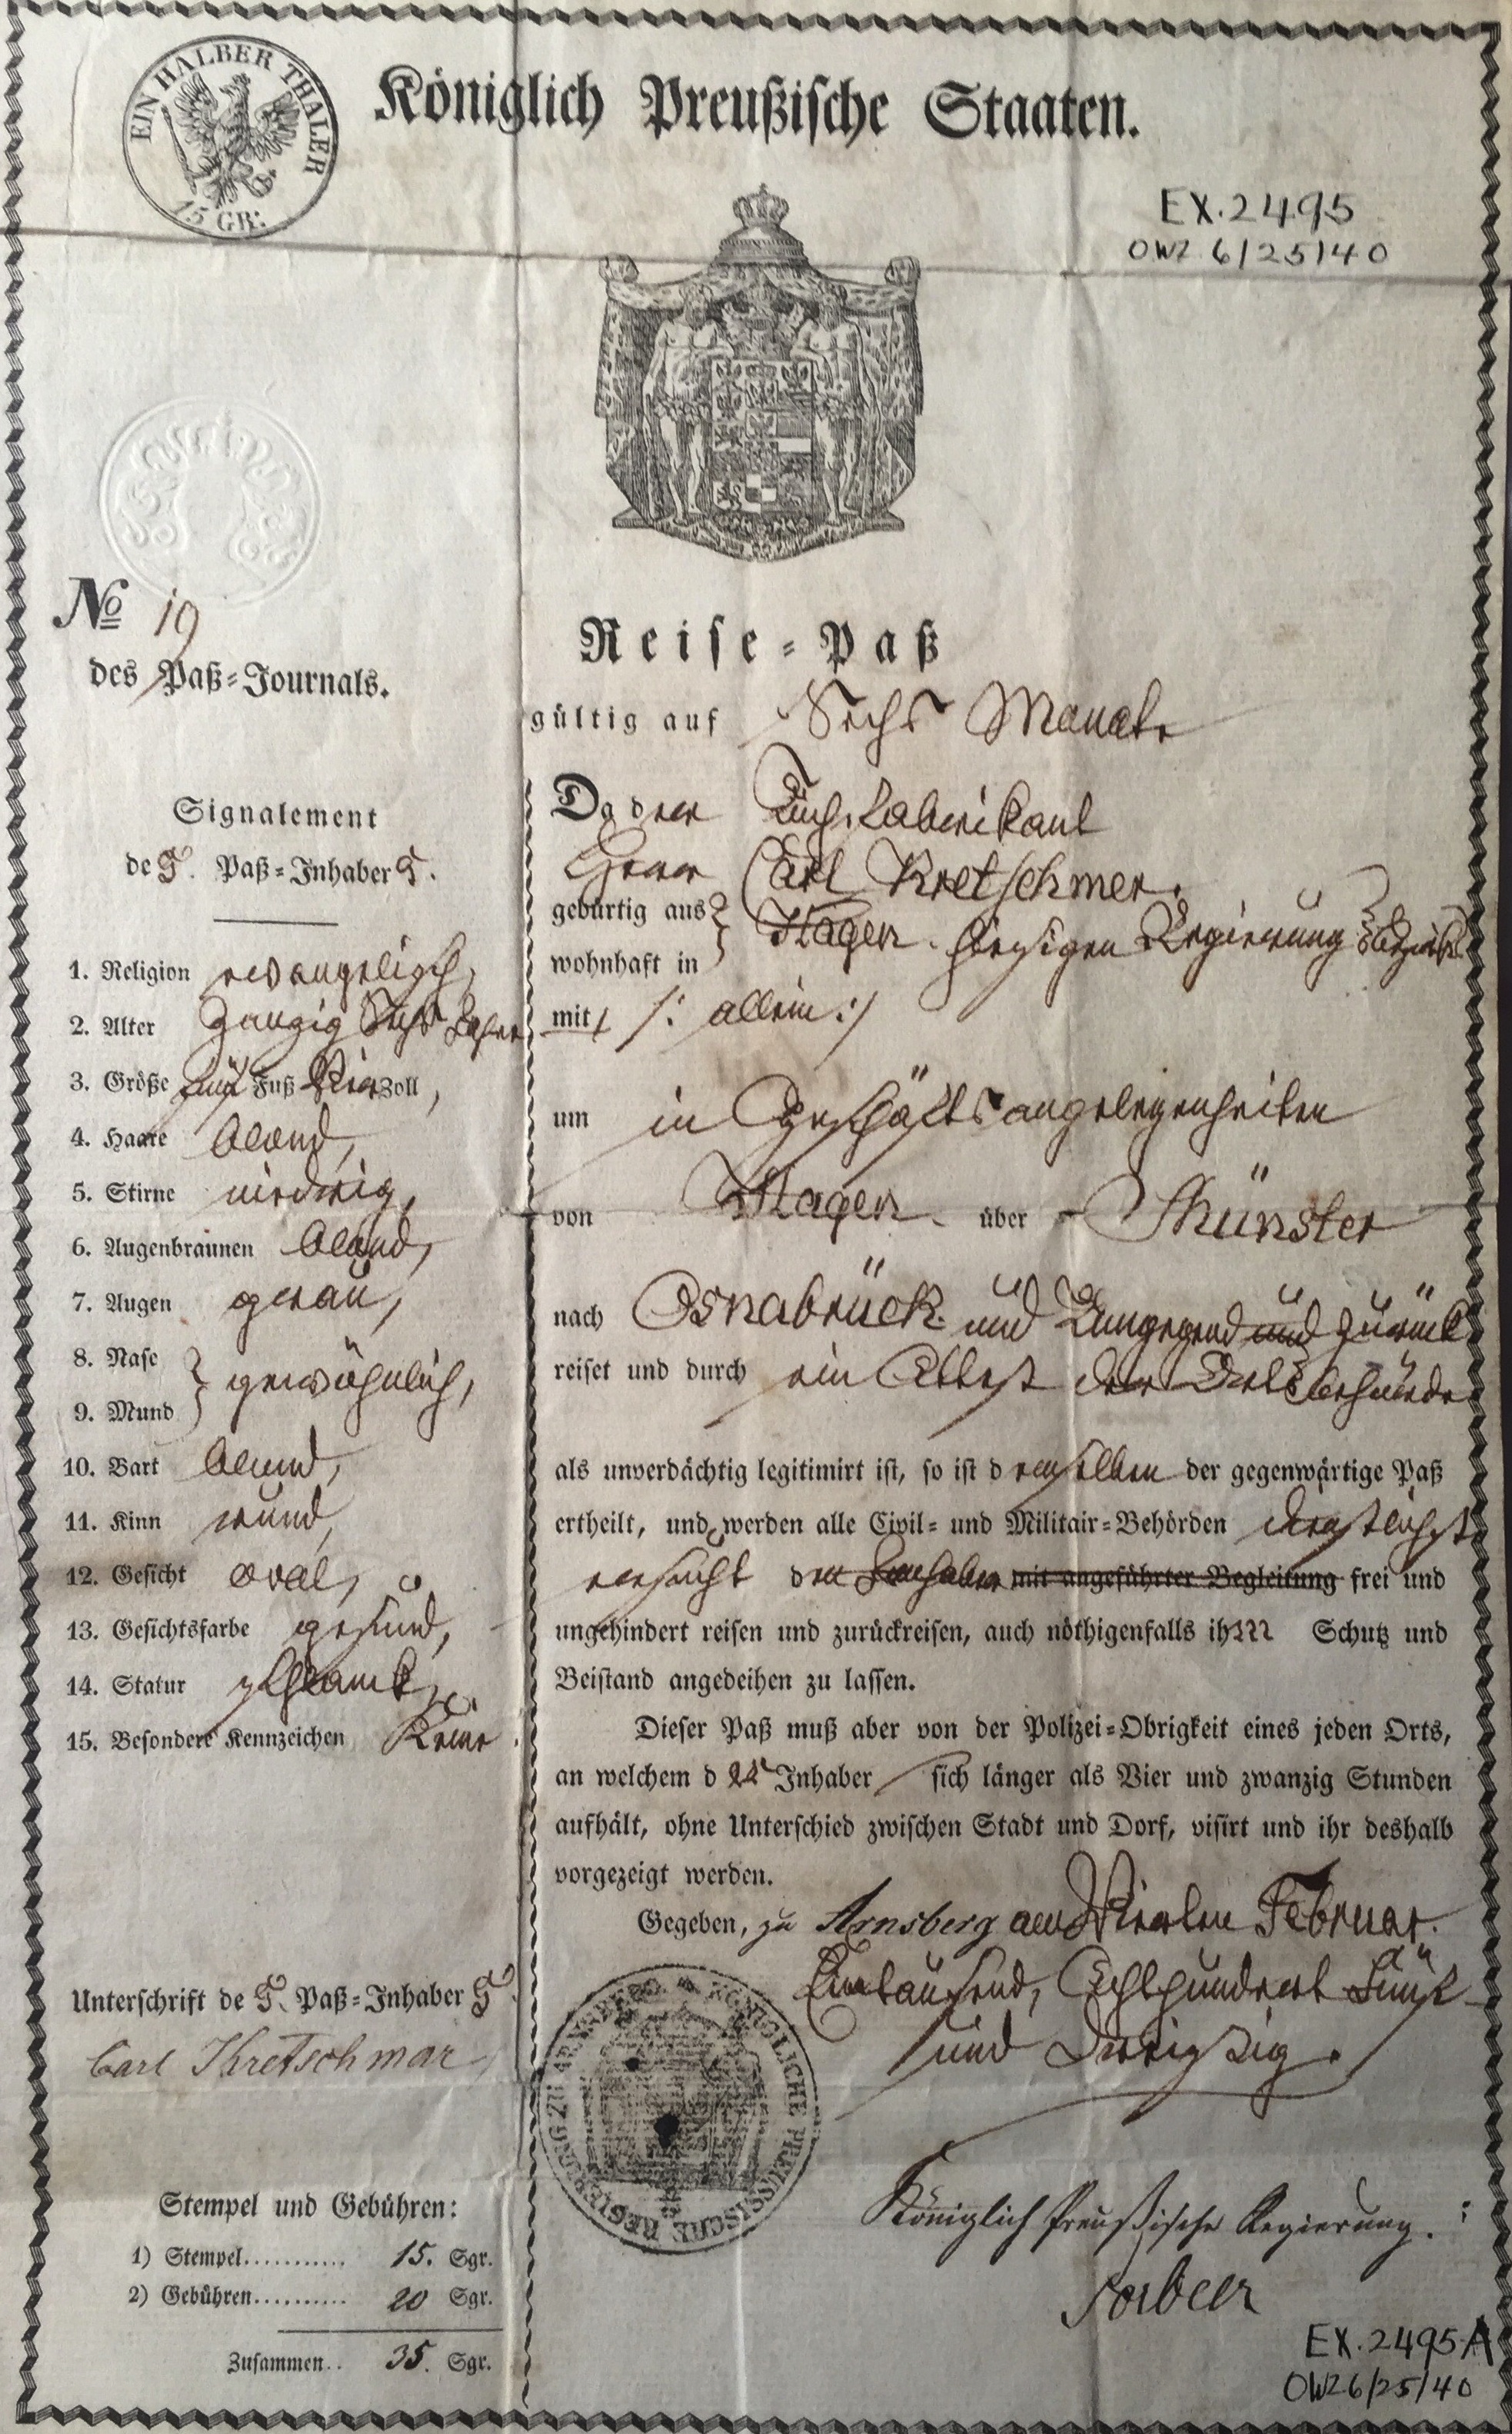 1820 Prussia Passport